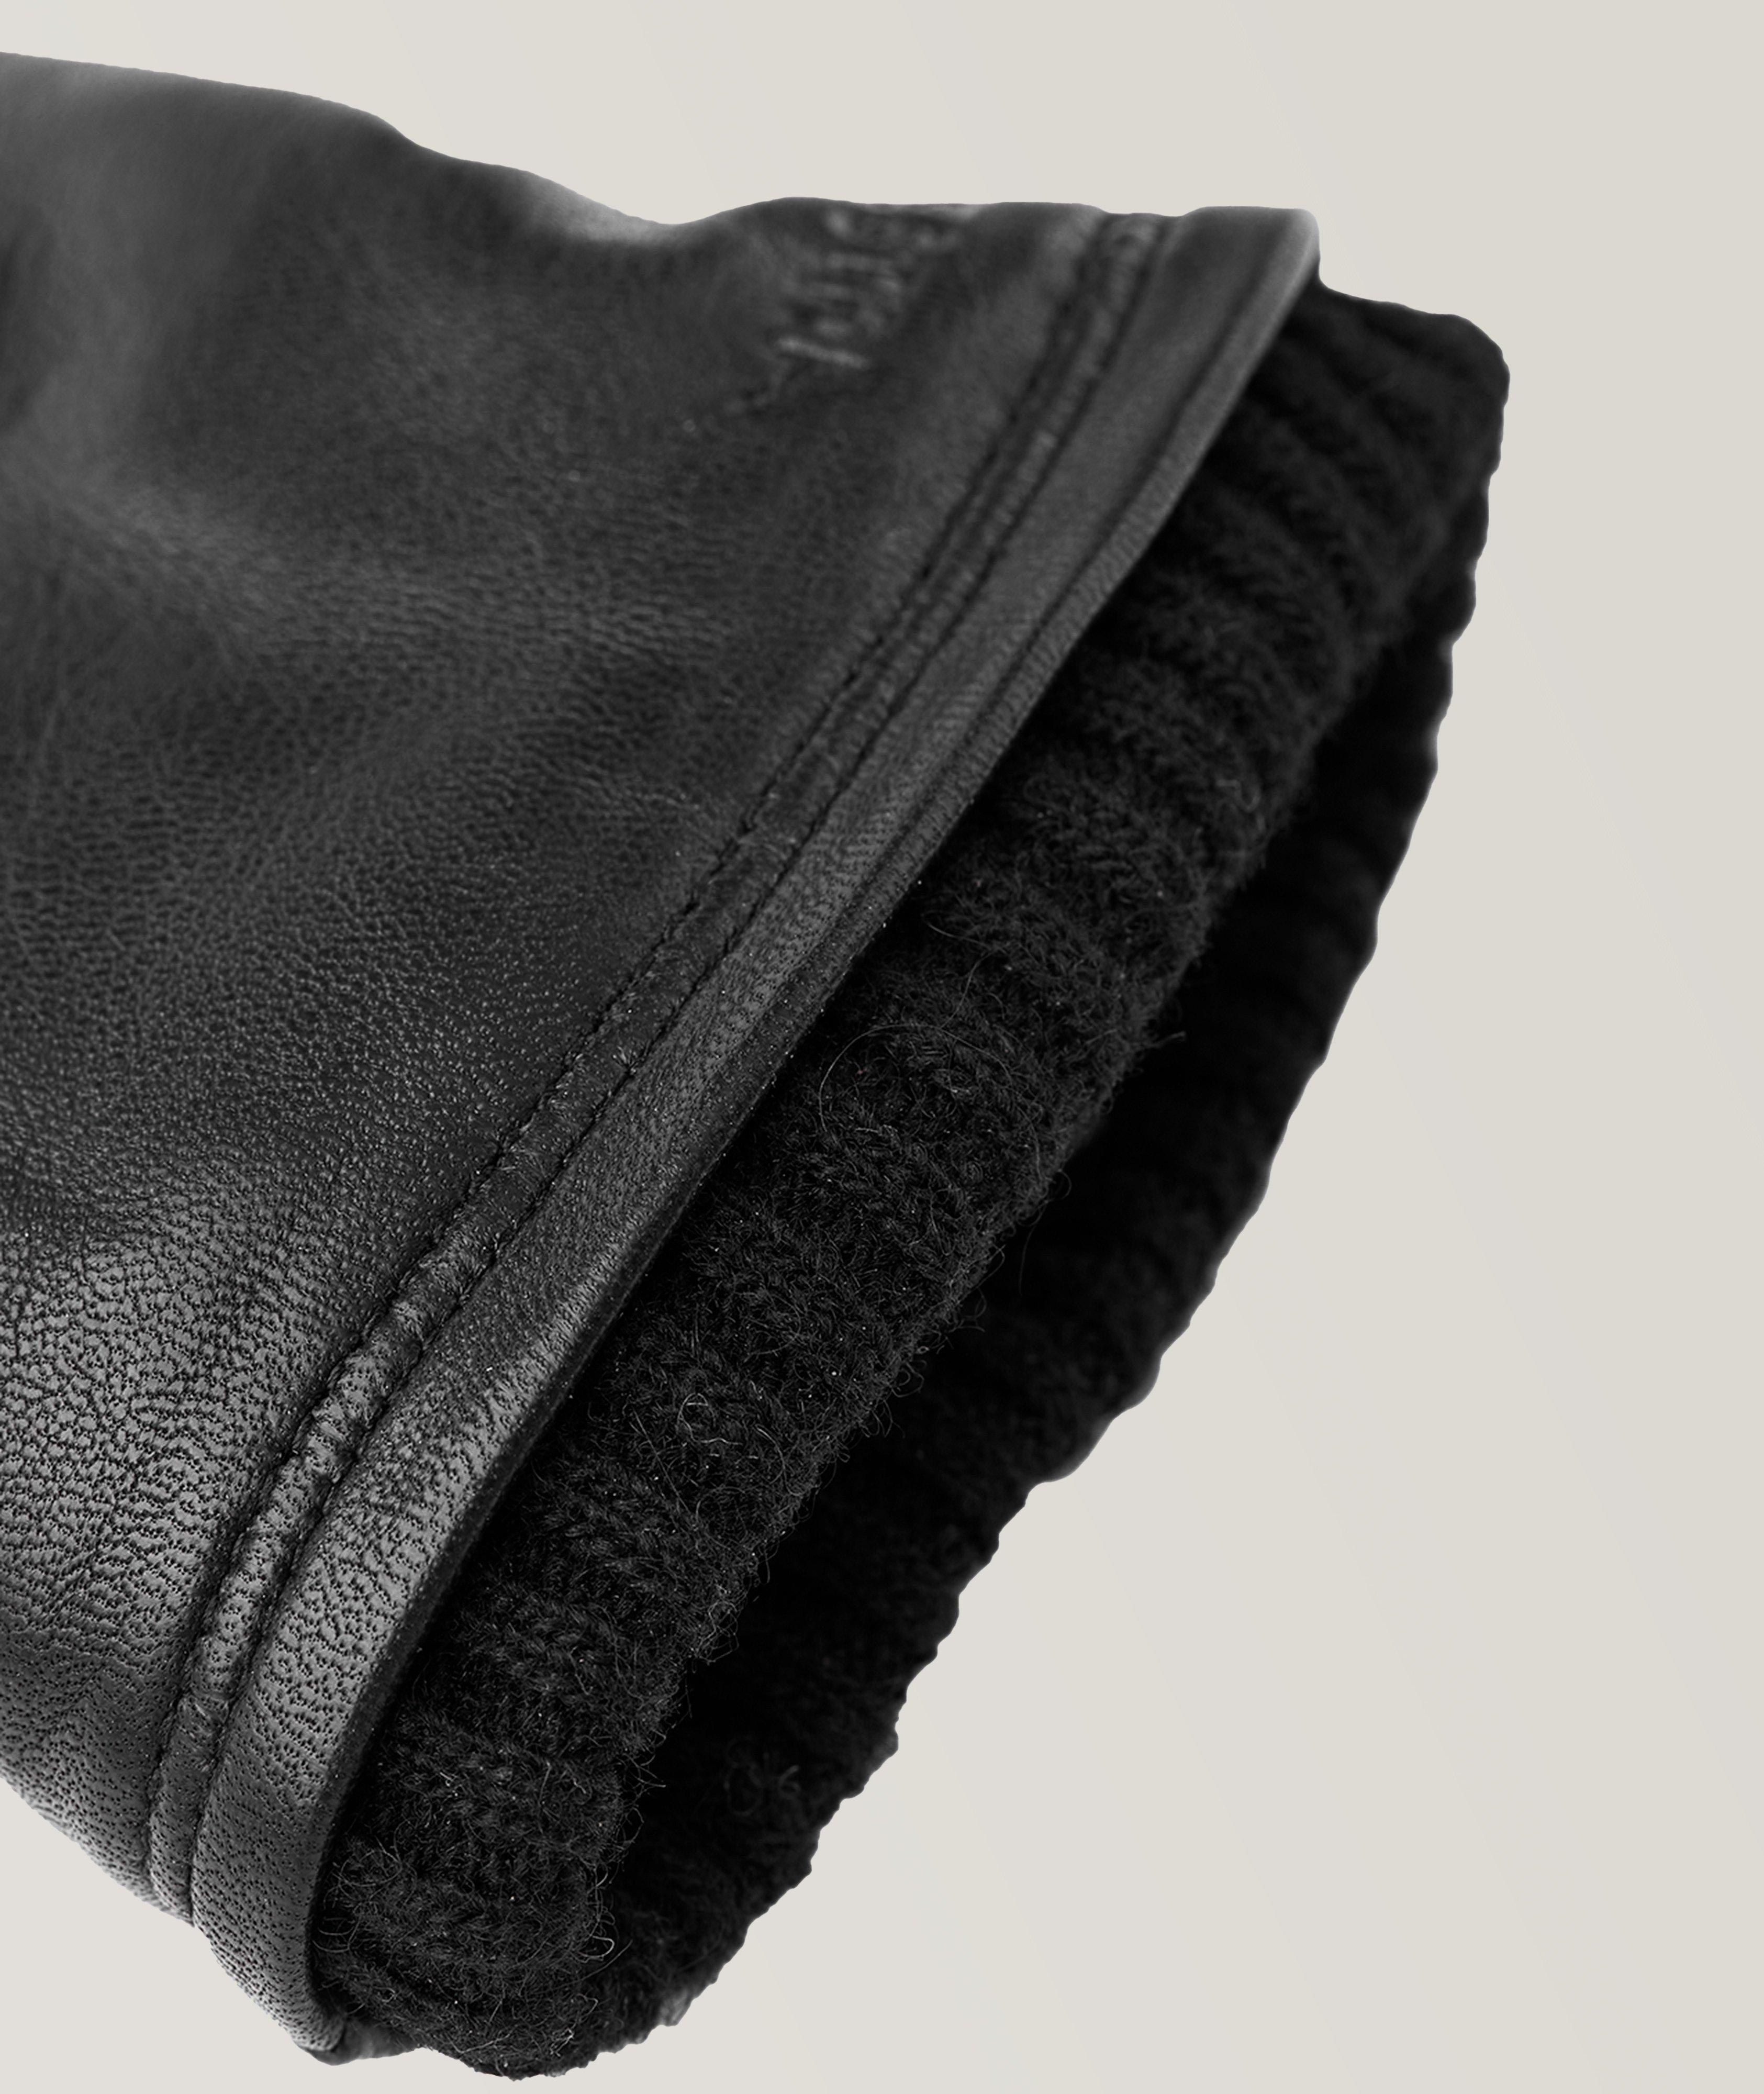 John Touchscreen-Compatible Hairsheep Gloves image 1